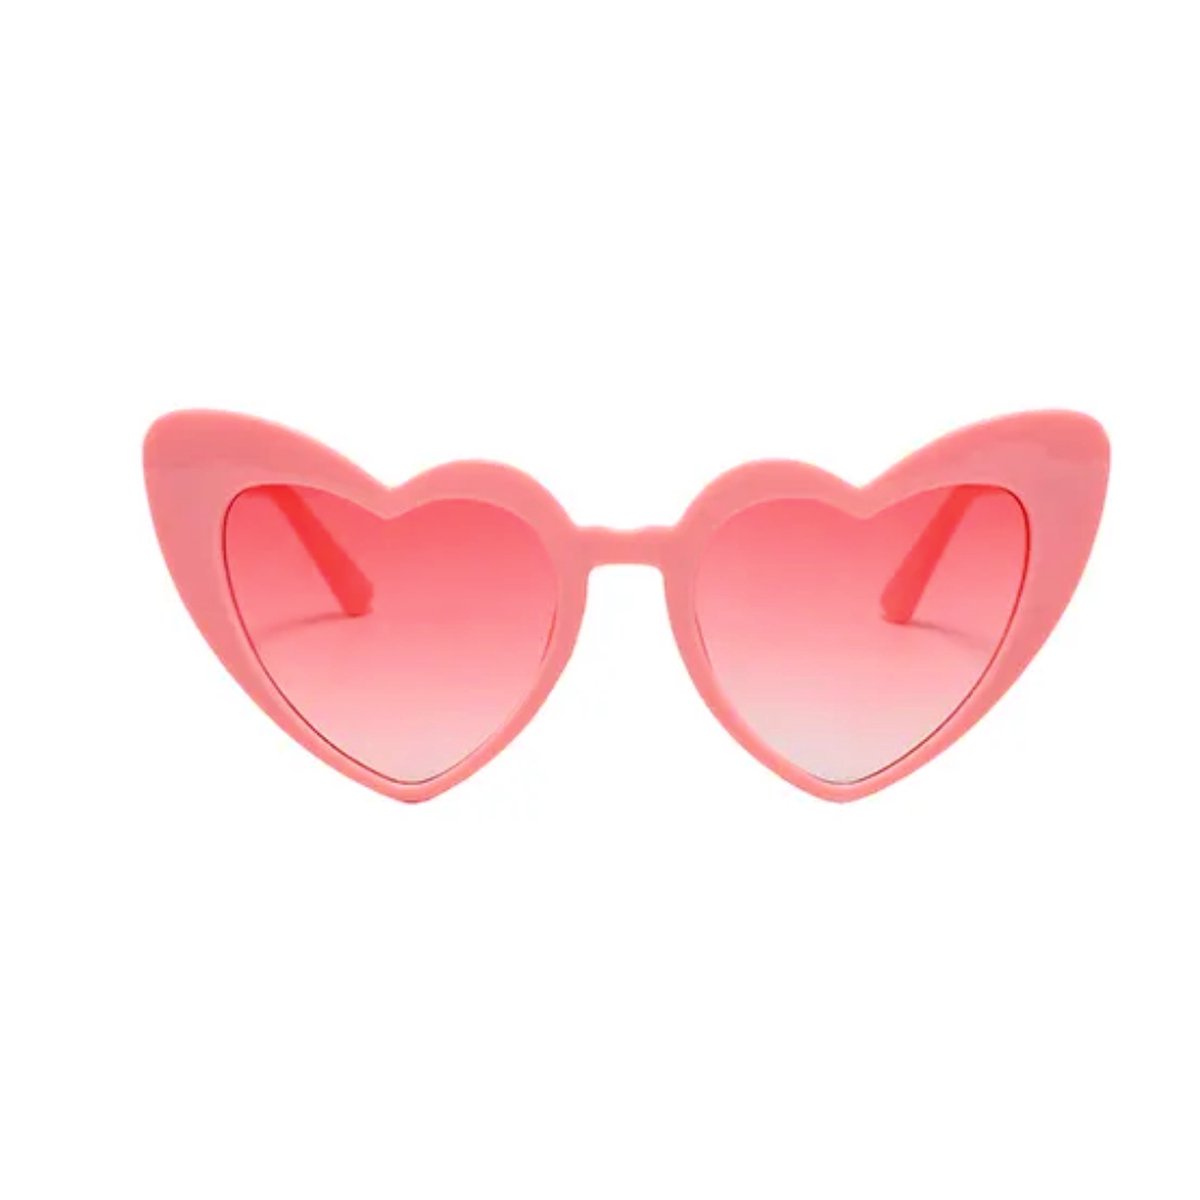 Hartjes zonnebril - Roze - festival bril / hippie bril / techno bril / rave bril / hart bril / bril hartvorm / hartenbril / hartjes bril